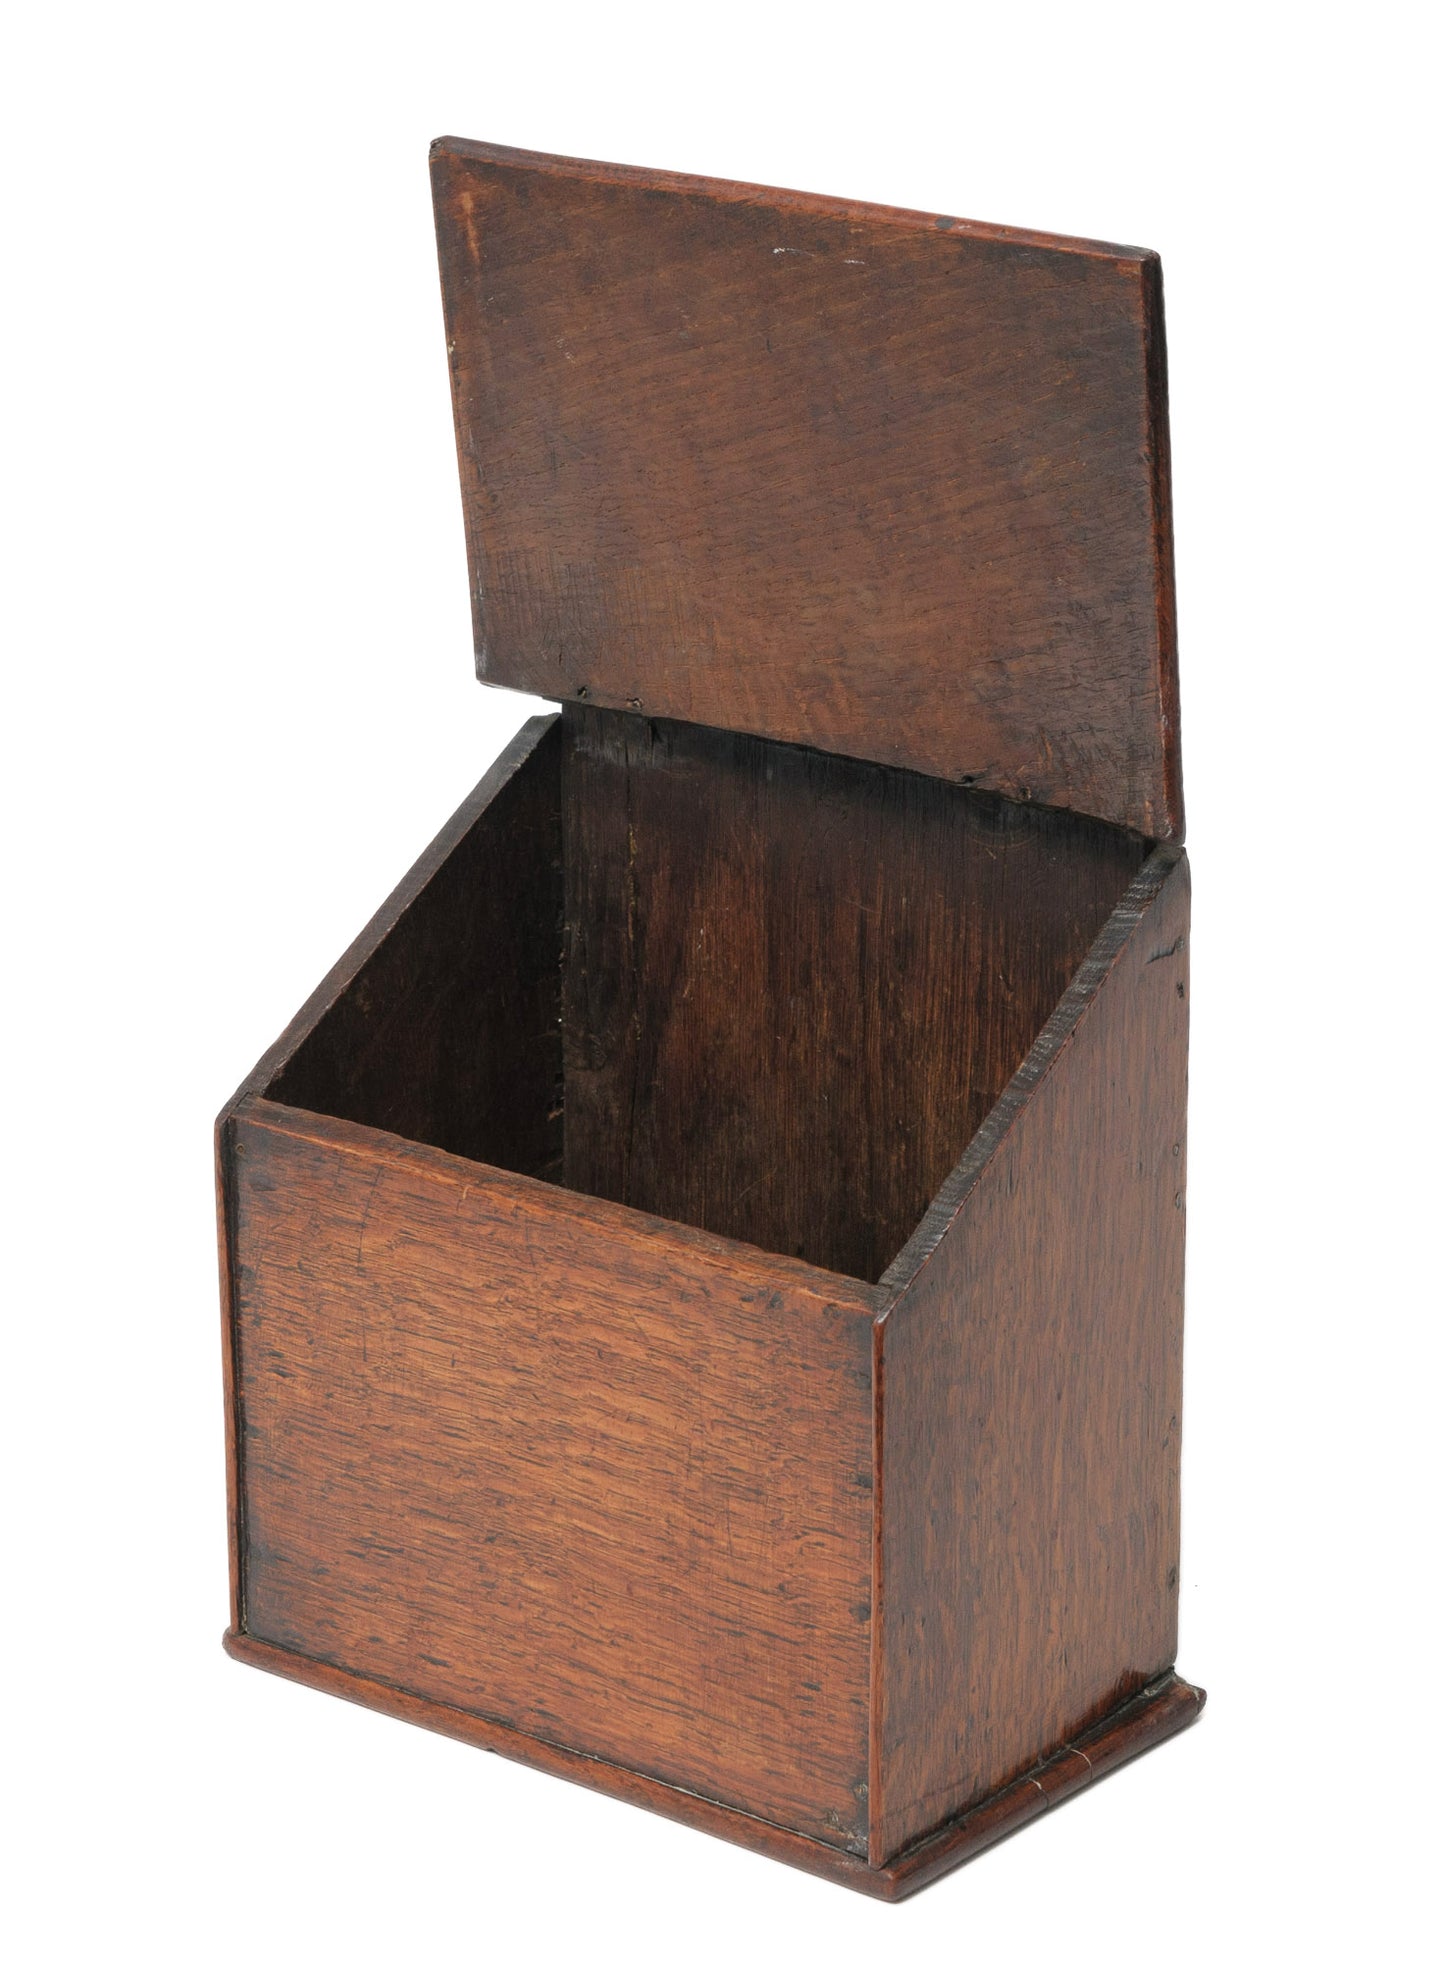 Georgian Antique English Provincial Oak Wood Salt Box with Hinged Lid (Code 1069)